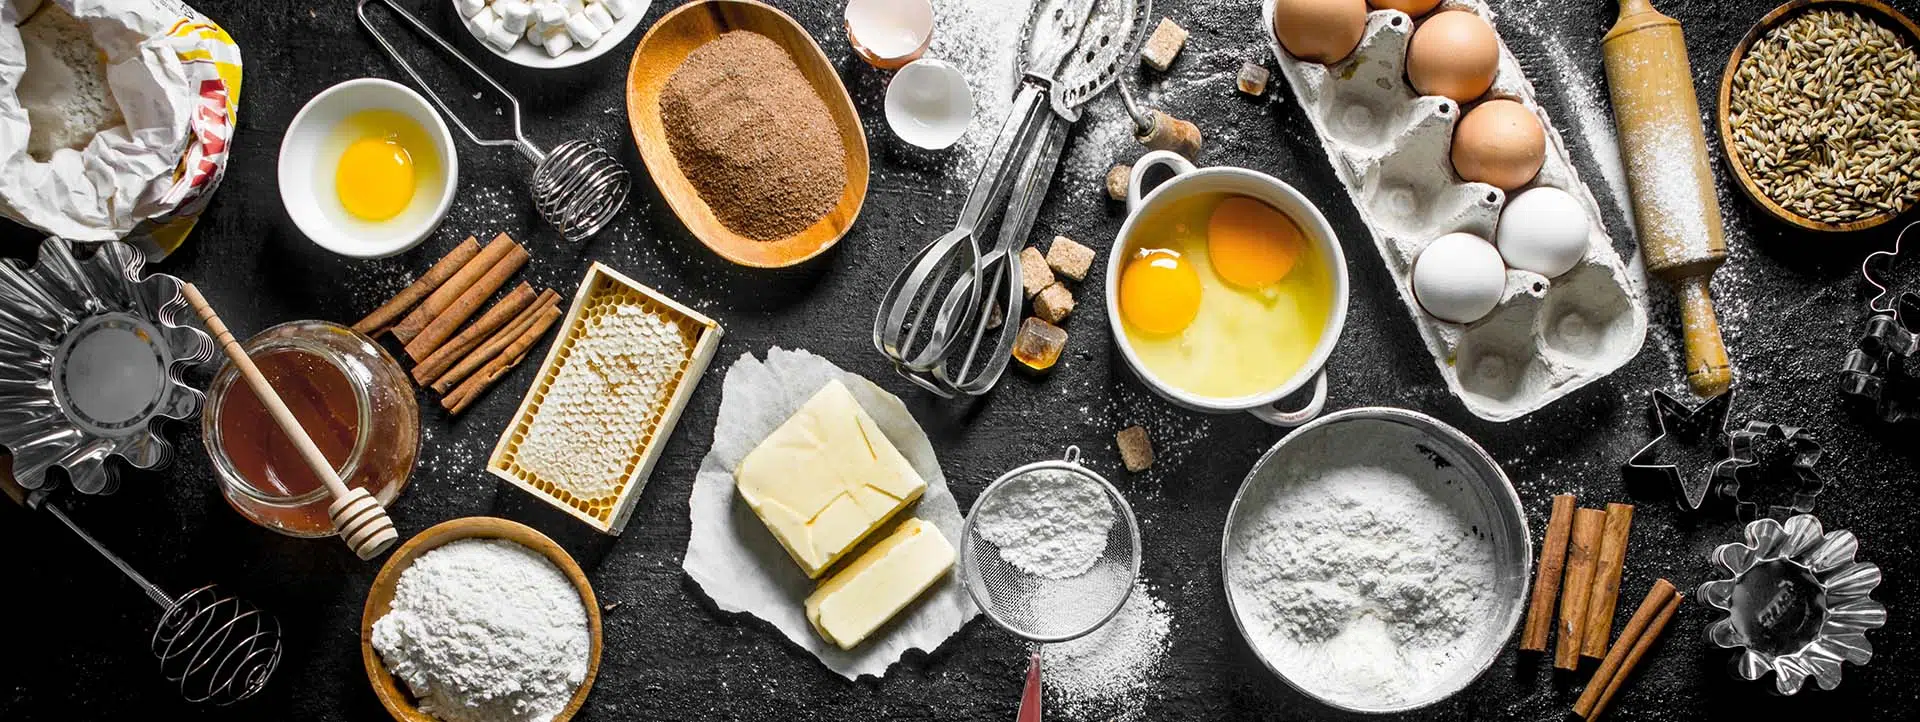 CBD Baking ingredients, egg, flour, butter etc on a black work surface